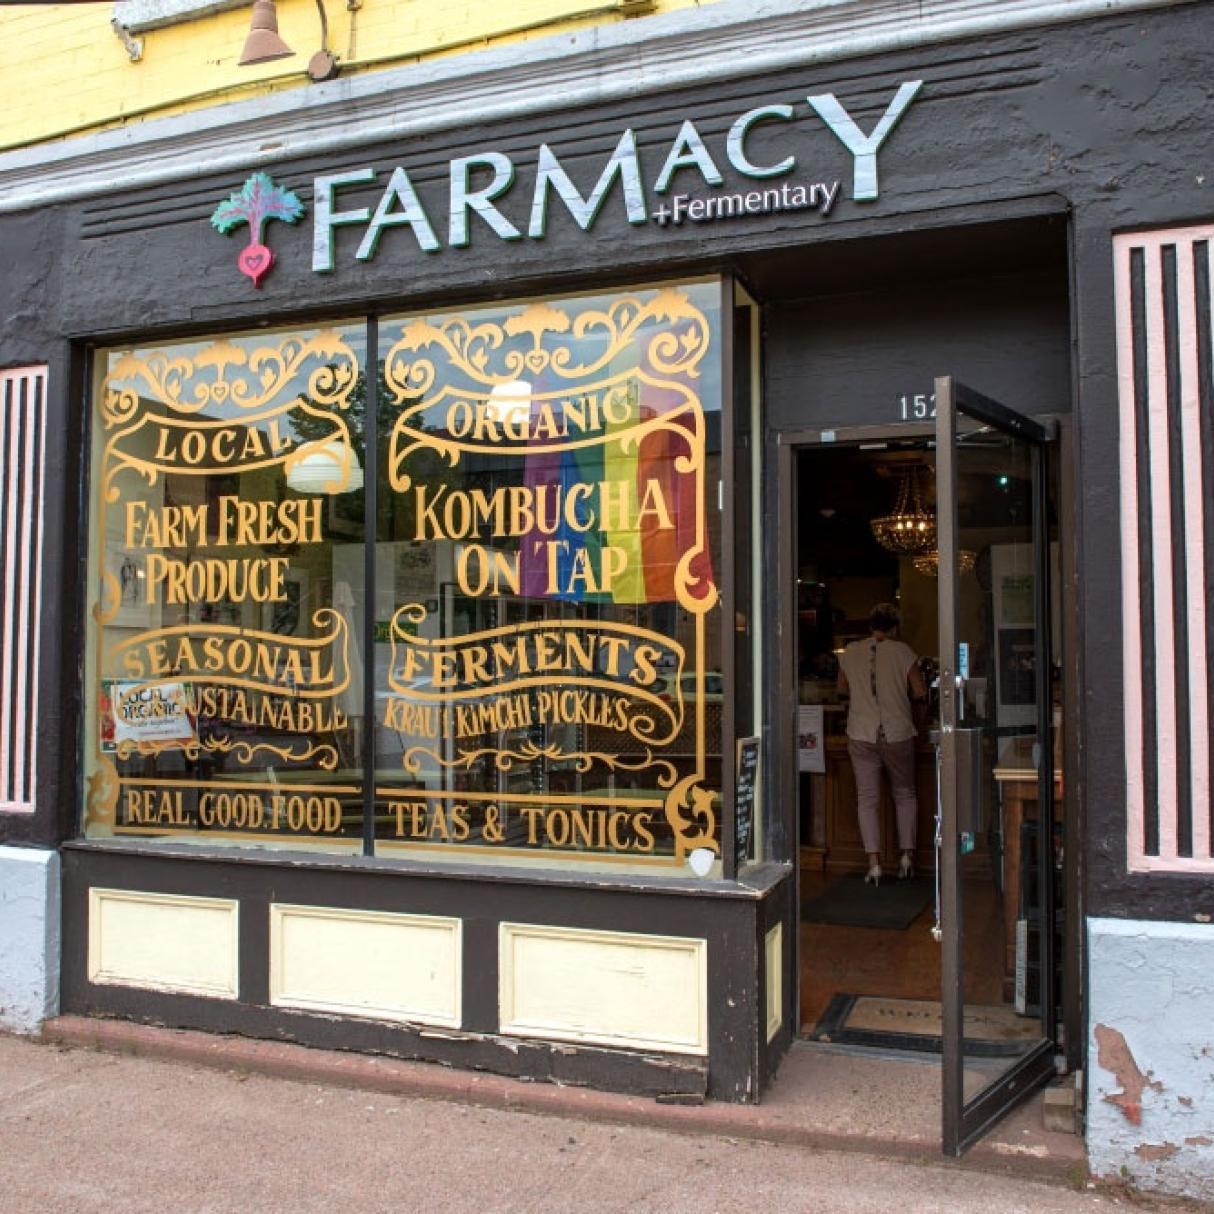 Farmacy & fermentary